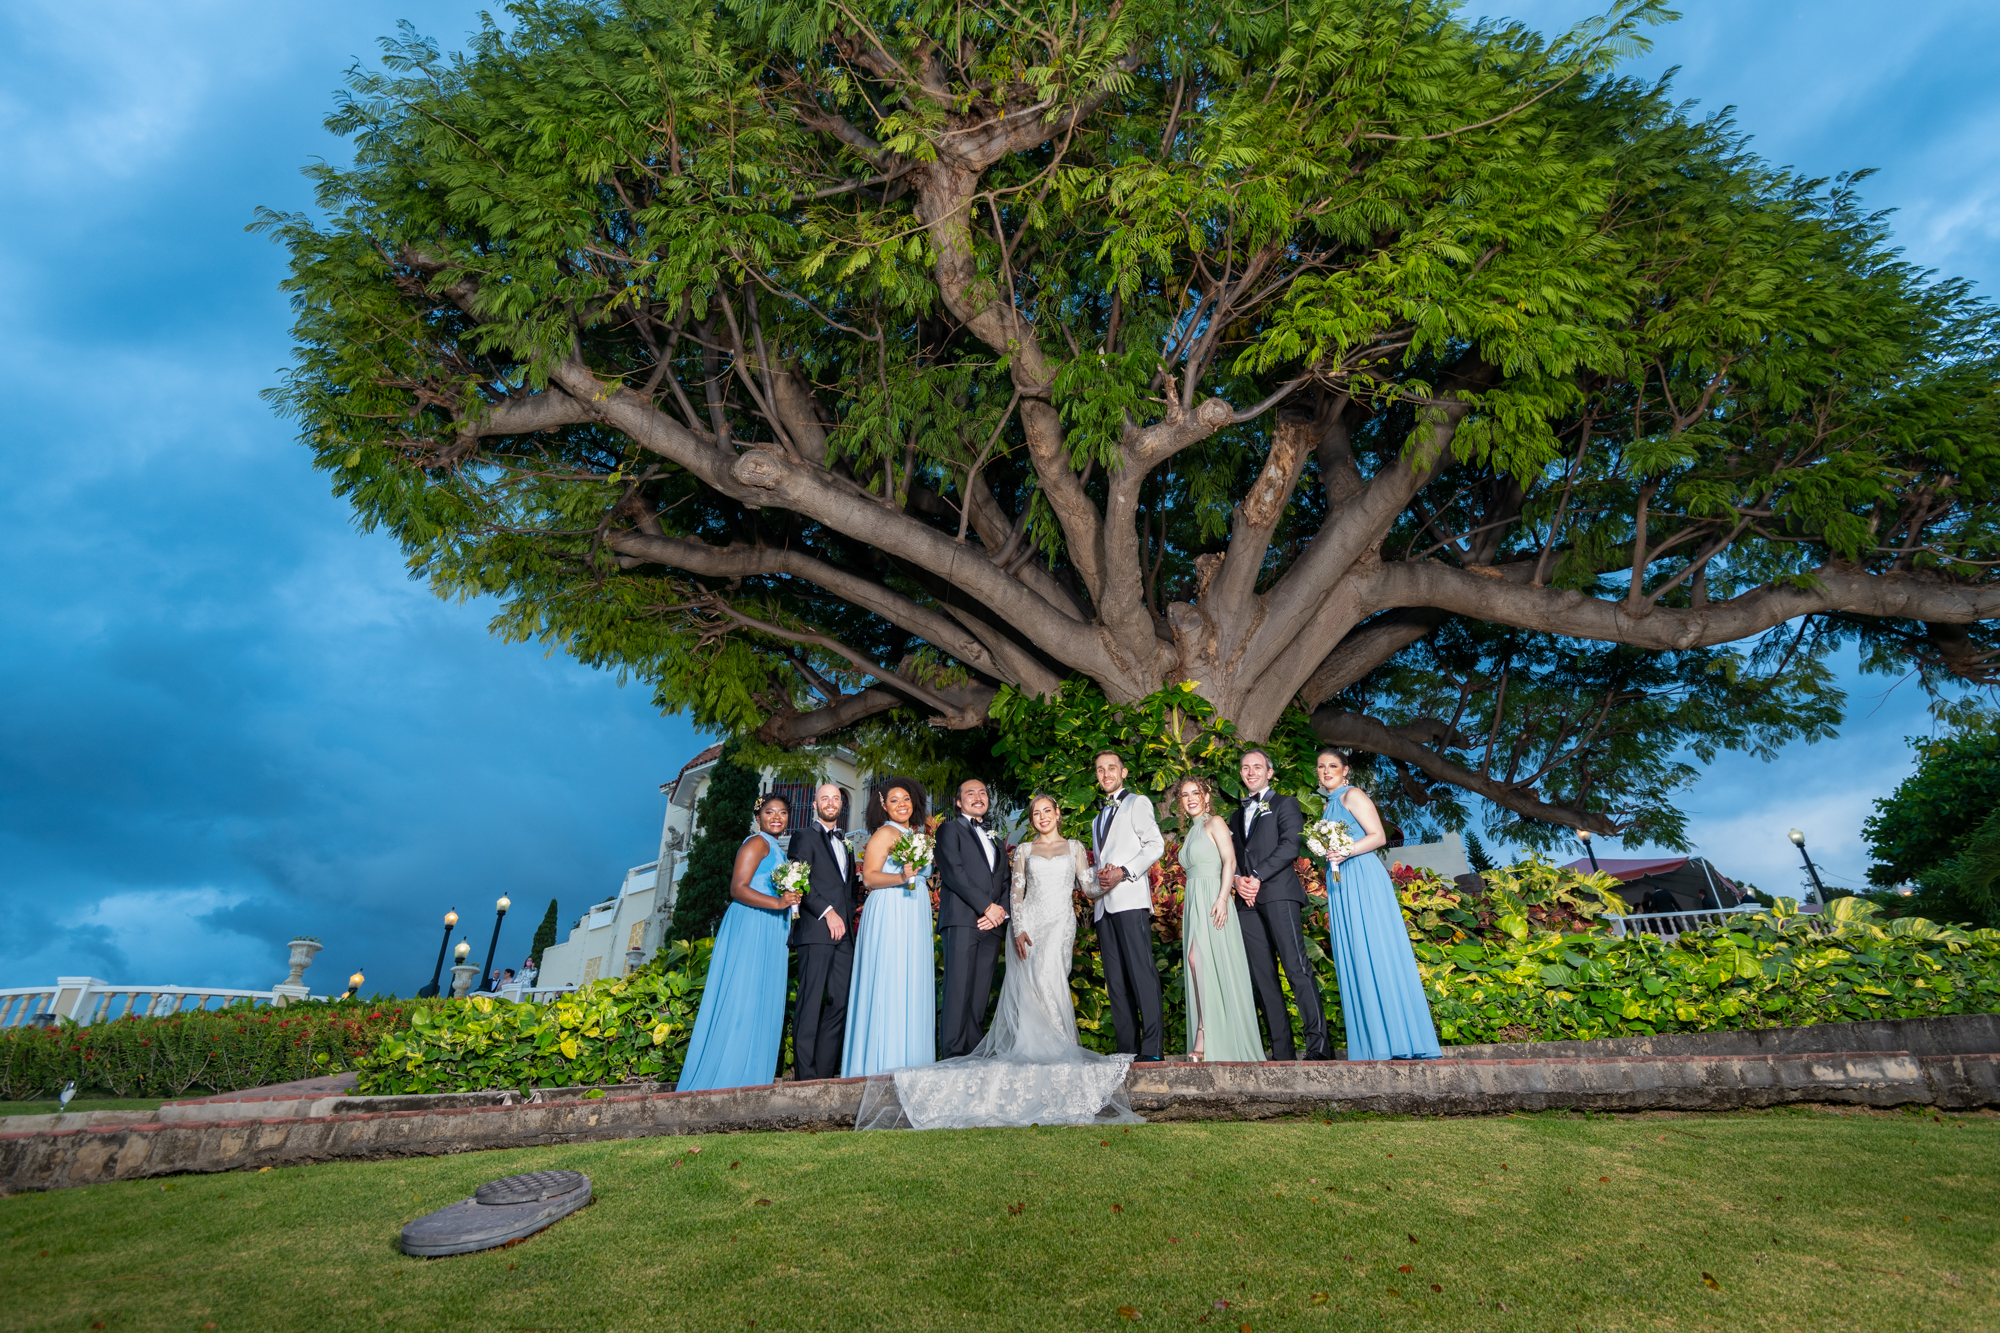 Wedding entourage in front of ancient tree in Castillo Serrallés